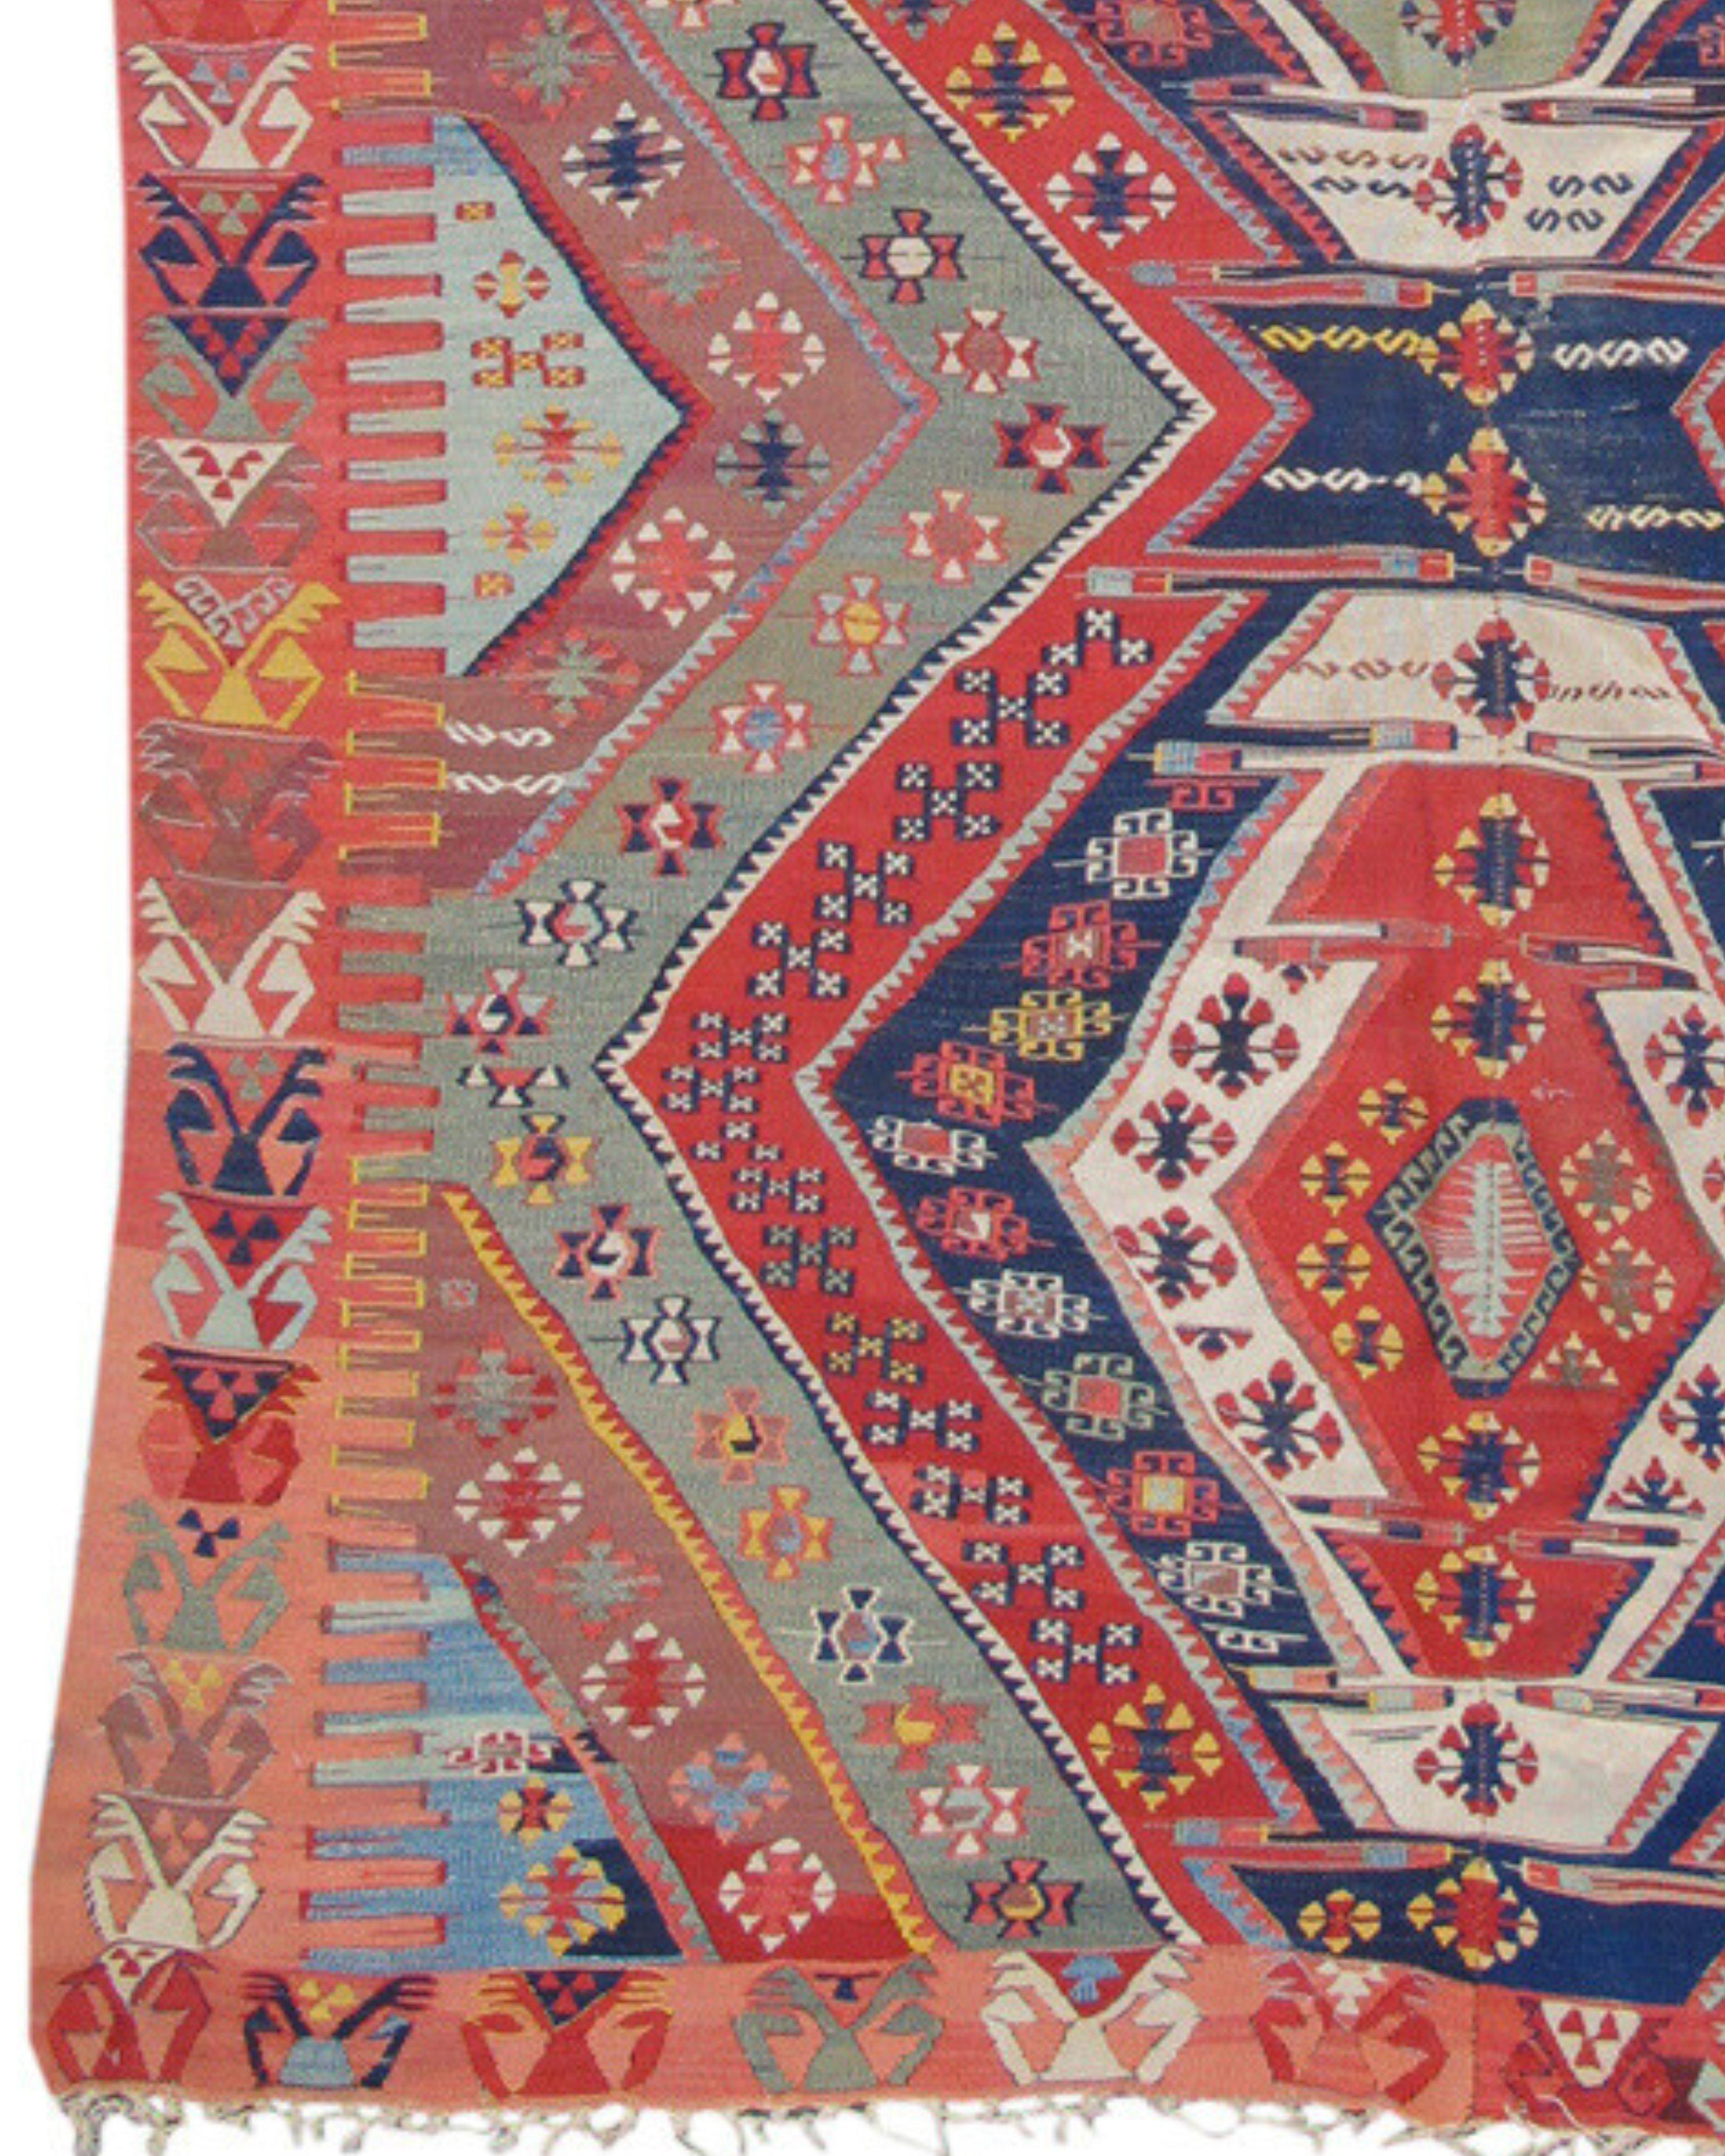 Hand-Woven Antique Multi-Colored Anatolian Kilim Rug, Mid-19th Century  For Sale